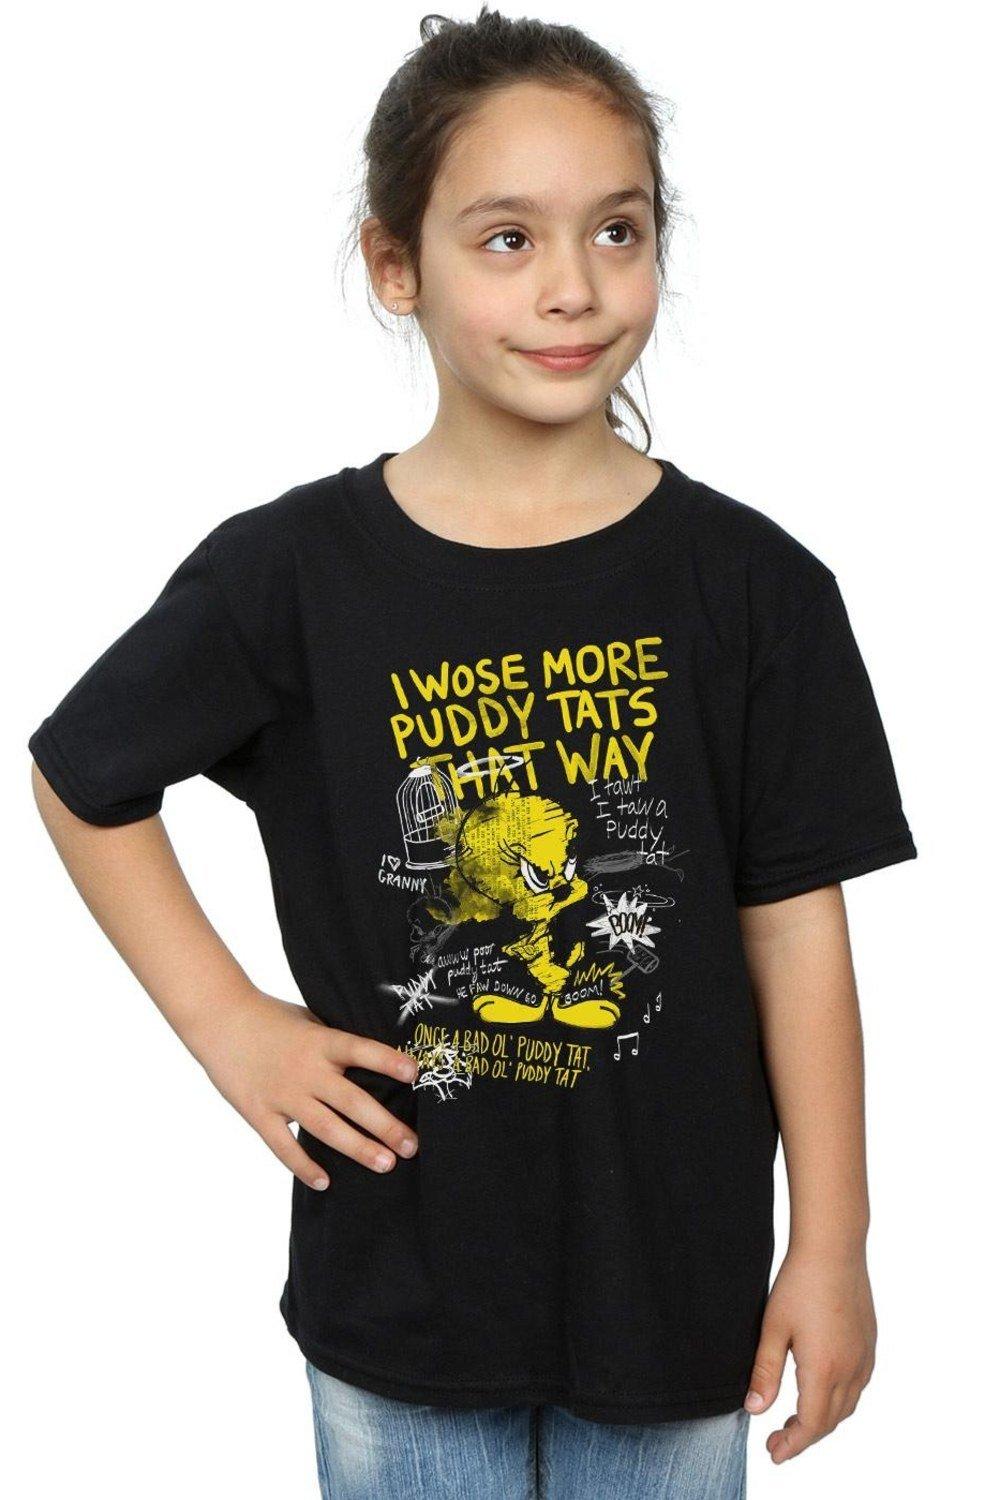 Tweety Pie More Puddy Tats Cotton T-Shirt